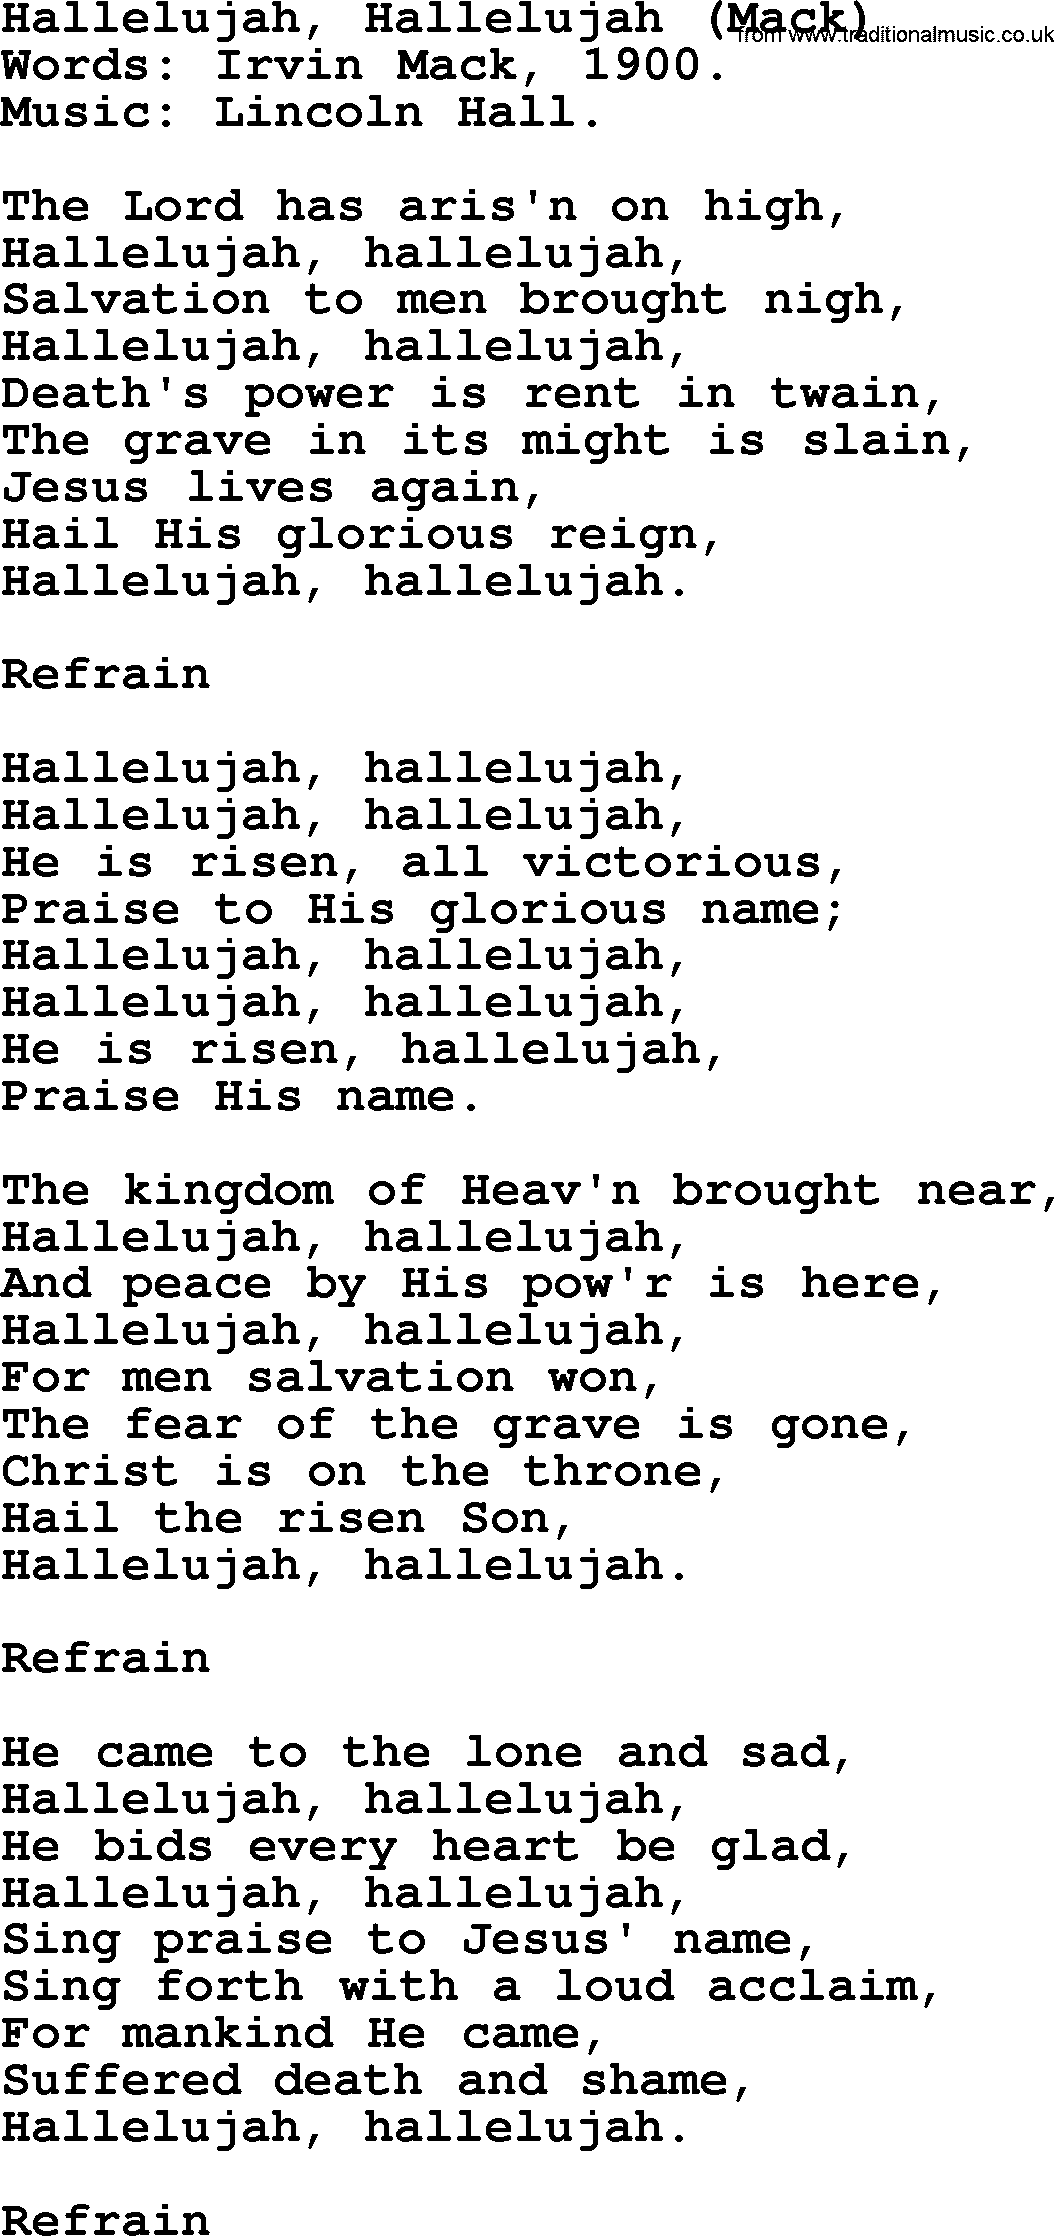 Easter Hymns, Hymn: Hallelujah, Hallelujah (mack), lyrics with PDF